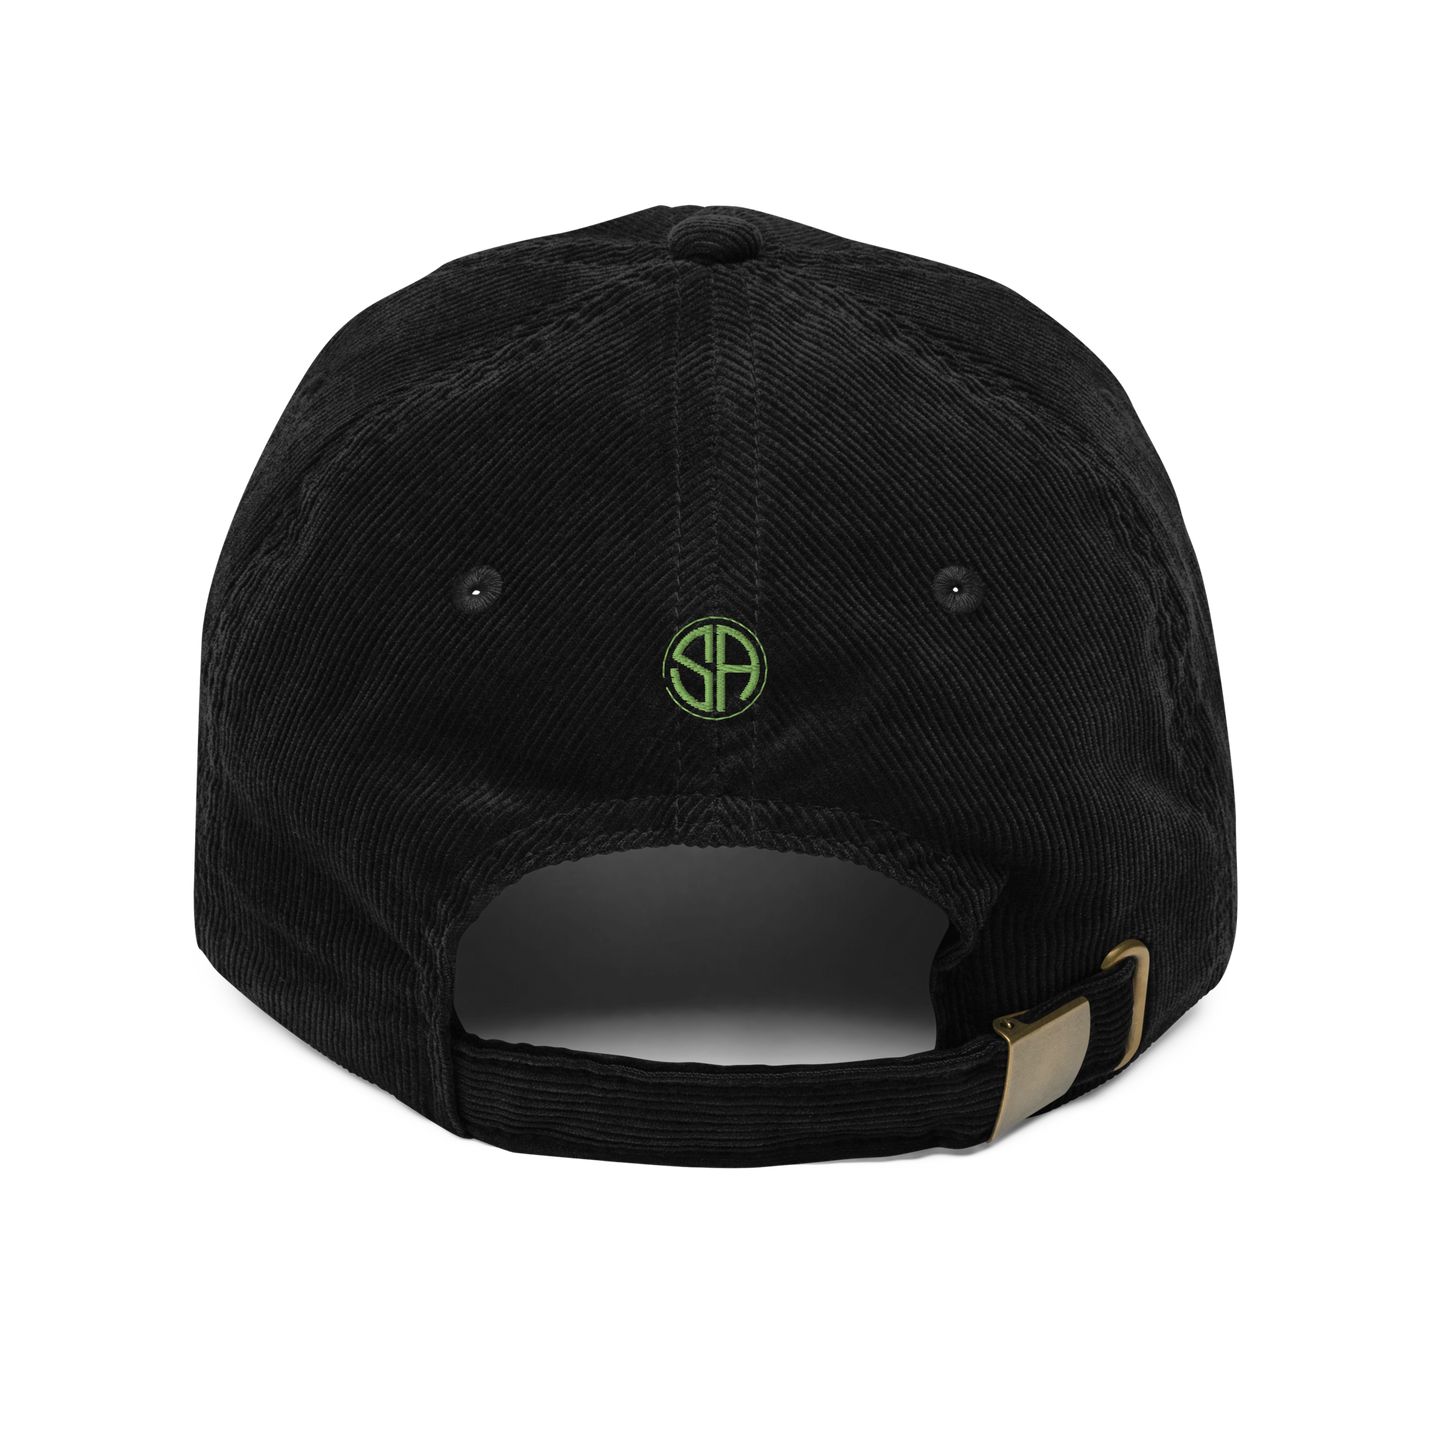 Home Field Advantage Custom Vintage Corduroy Baseball Hat black kiwi green